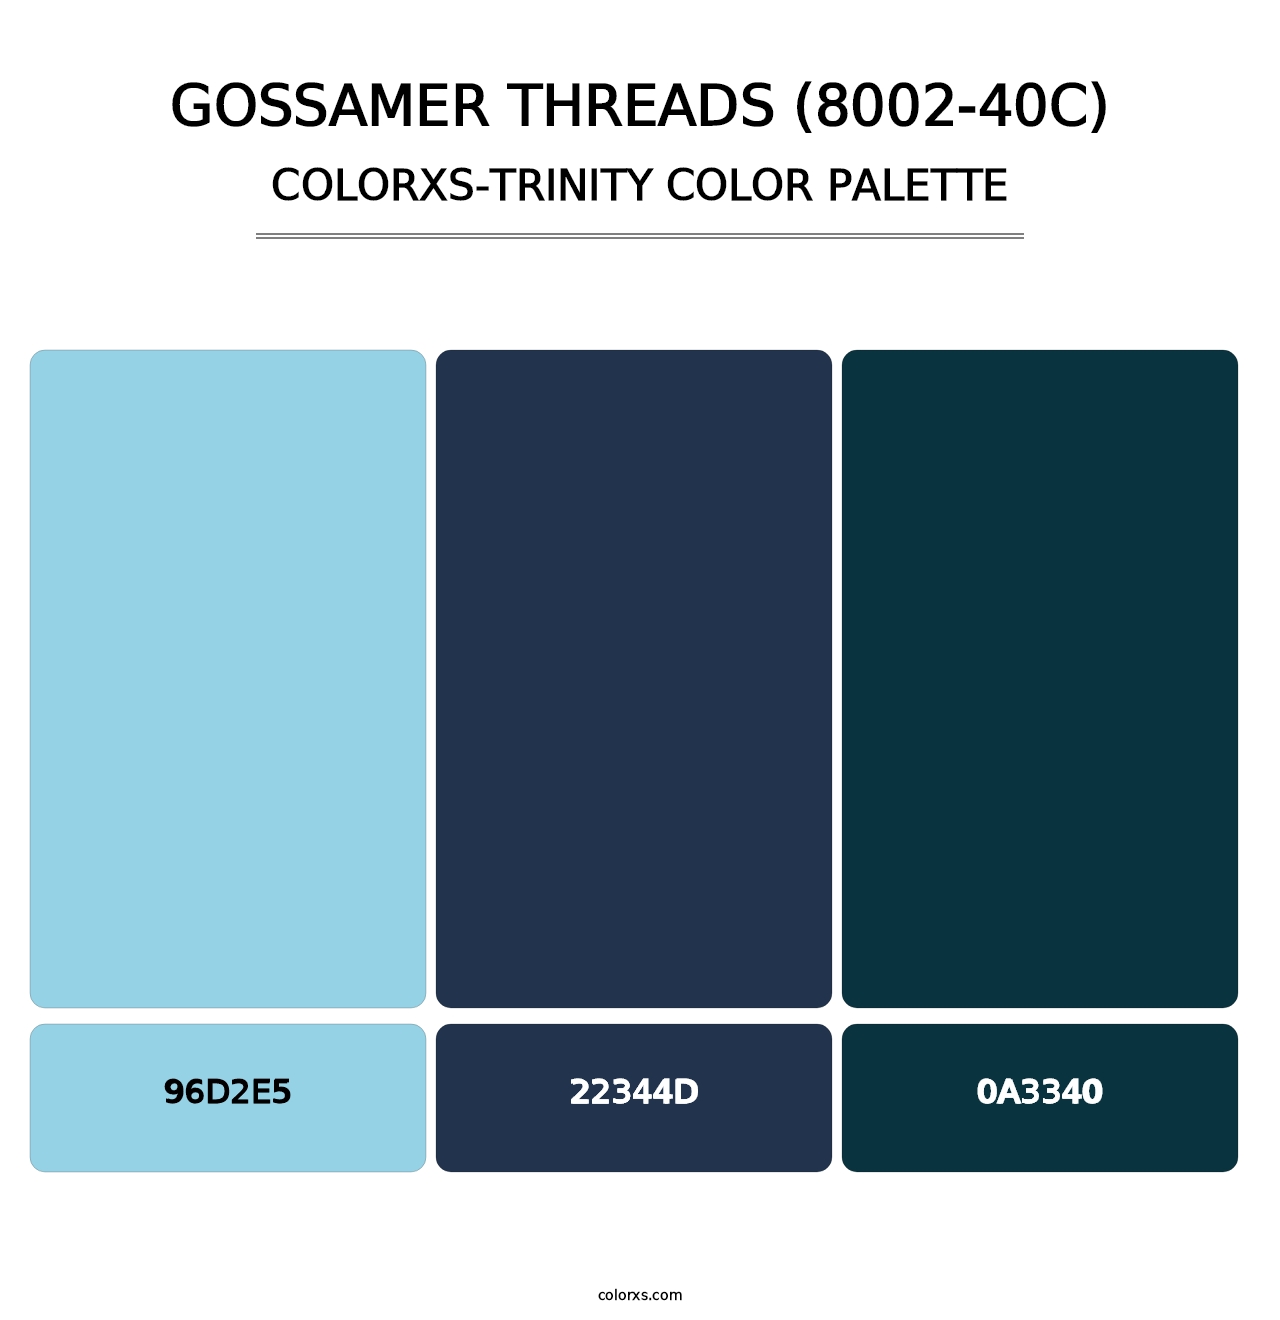 Gossamer Threads (8002-40C) - Colorxs Trinity Palette